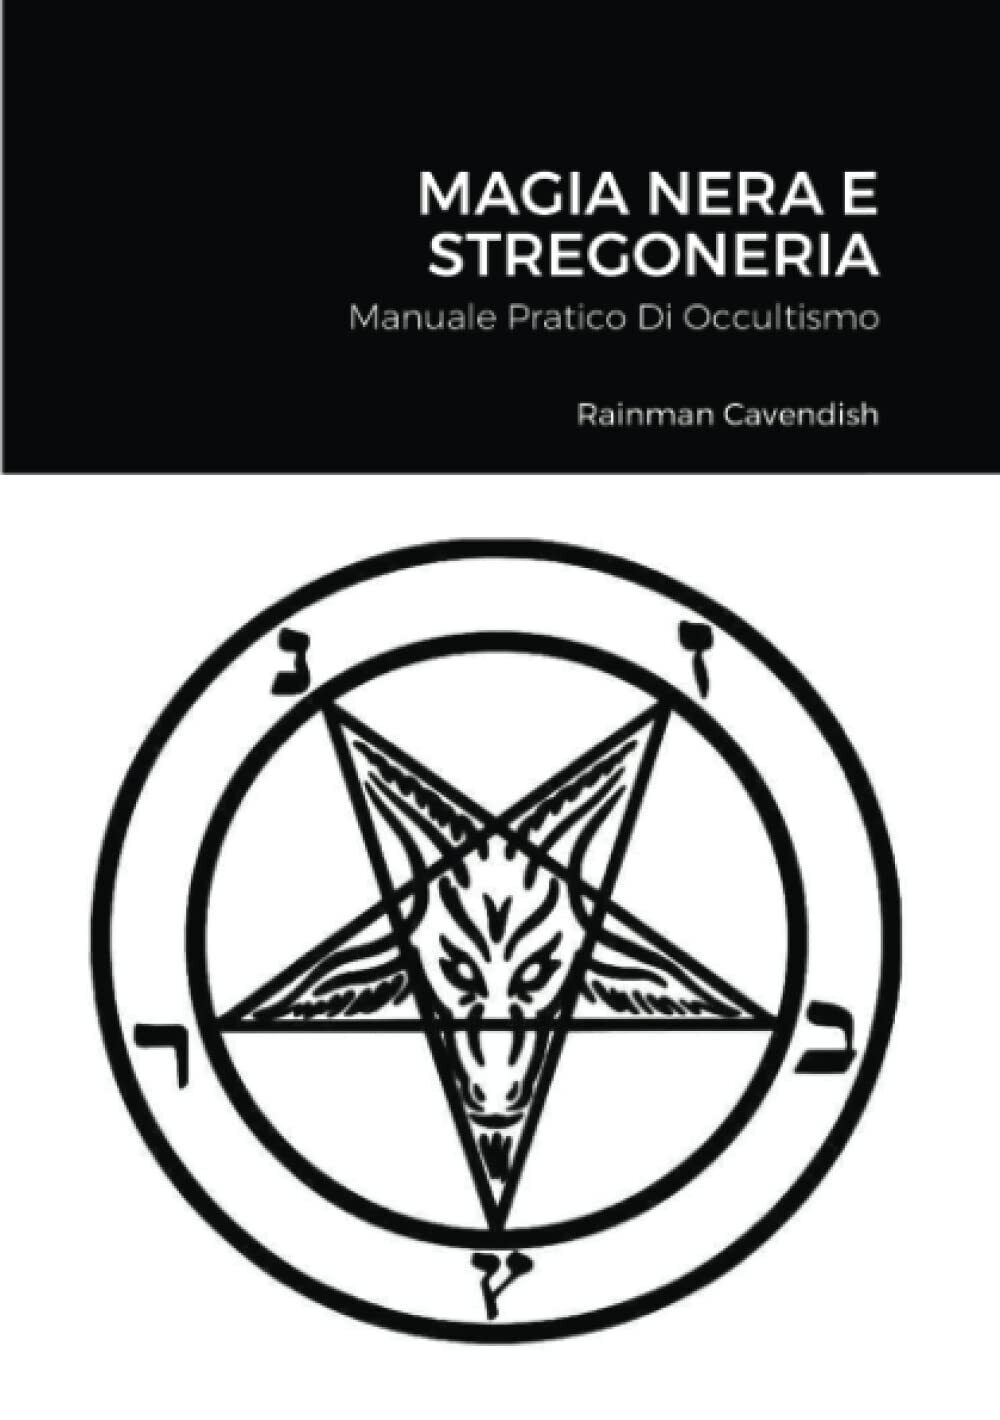 Magia Nera e Stregoneria - Rainman Cavendish - Lul?.com, 2022